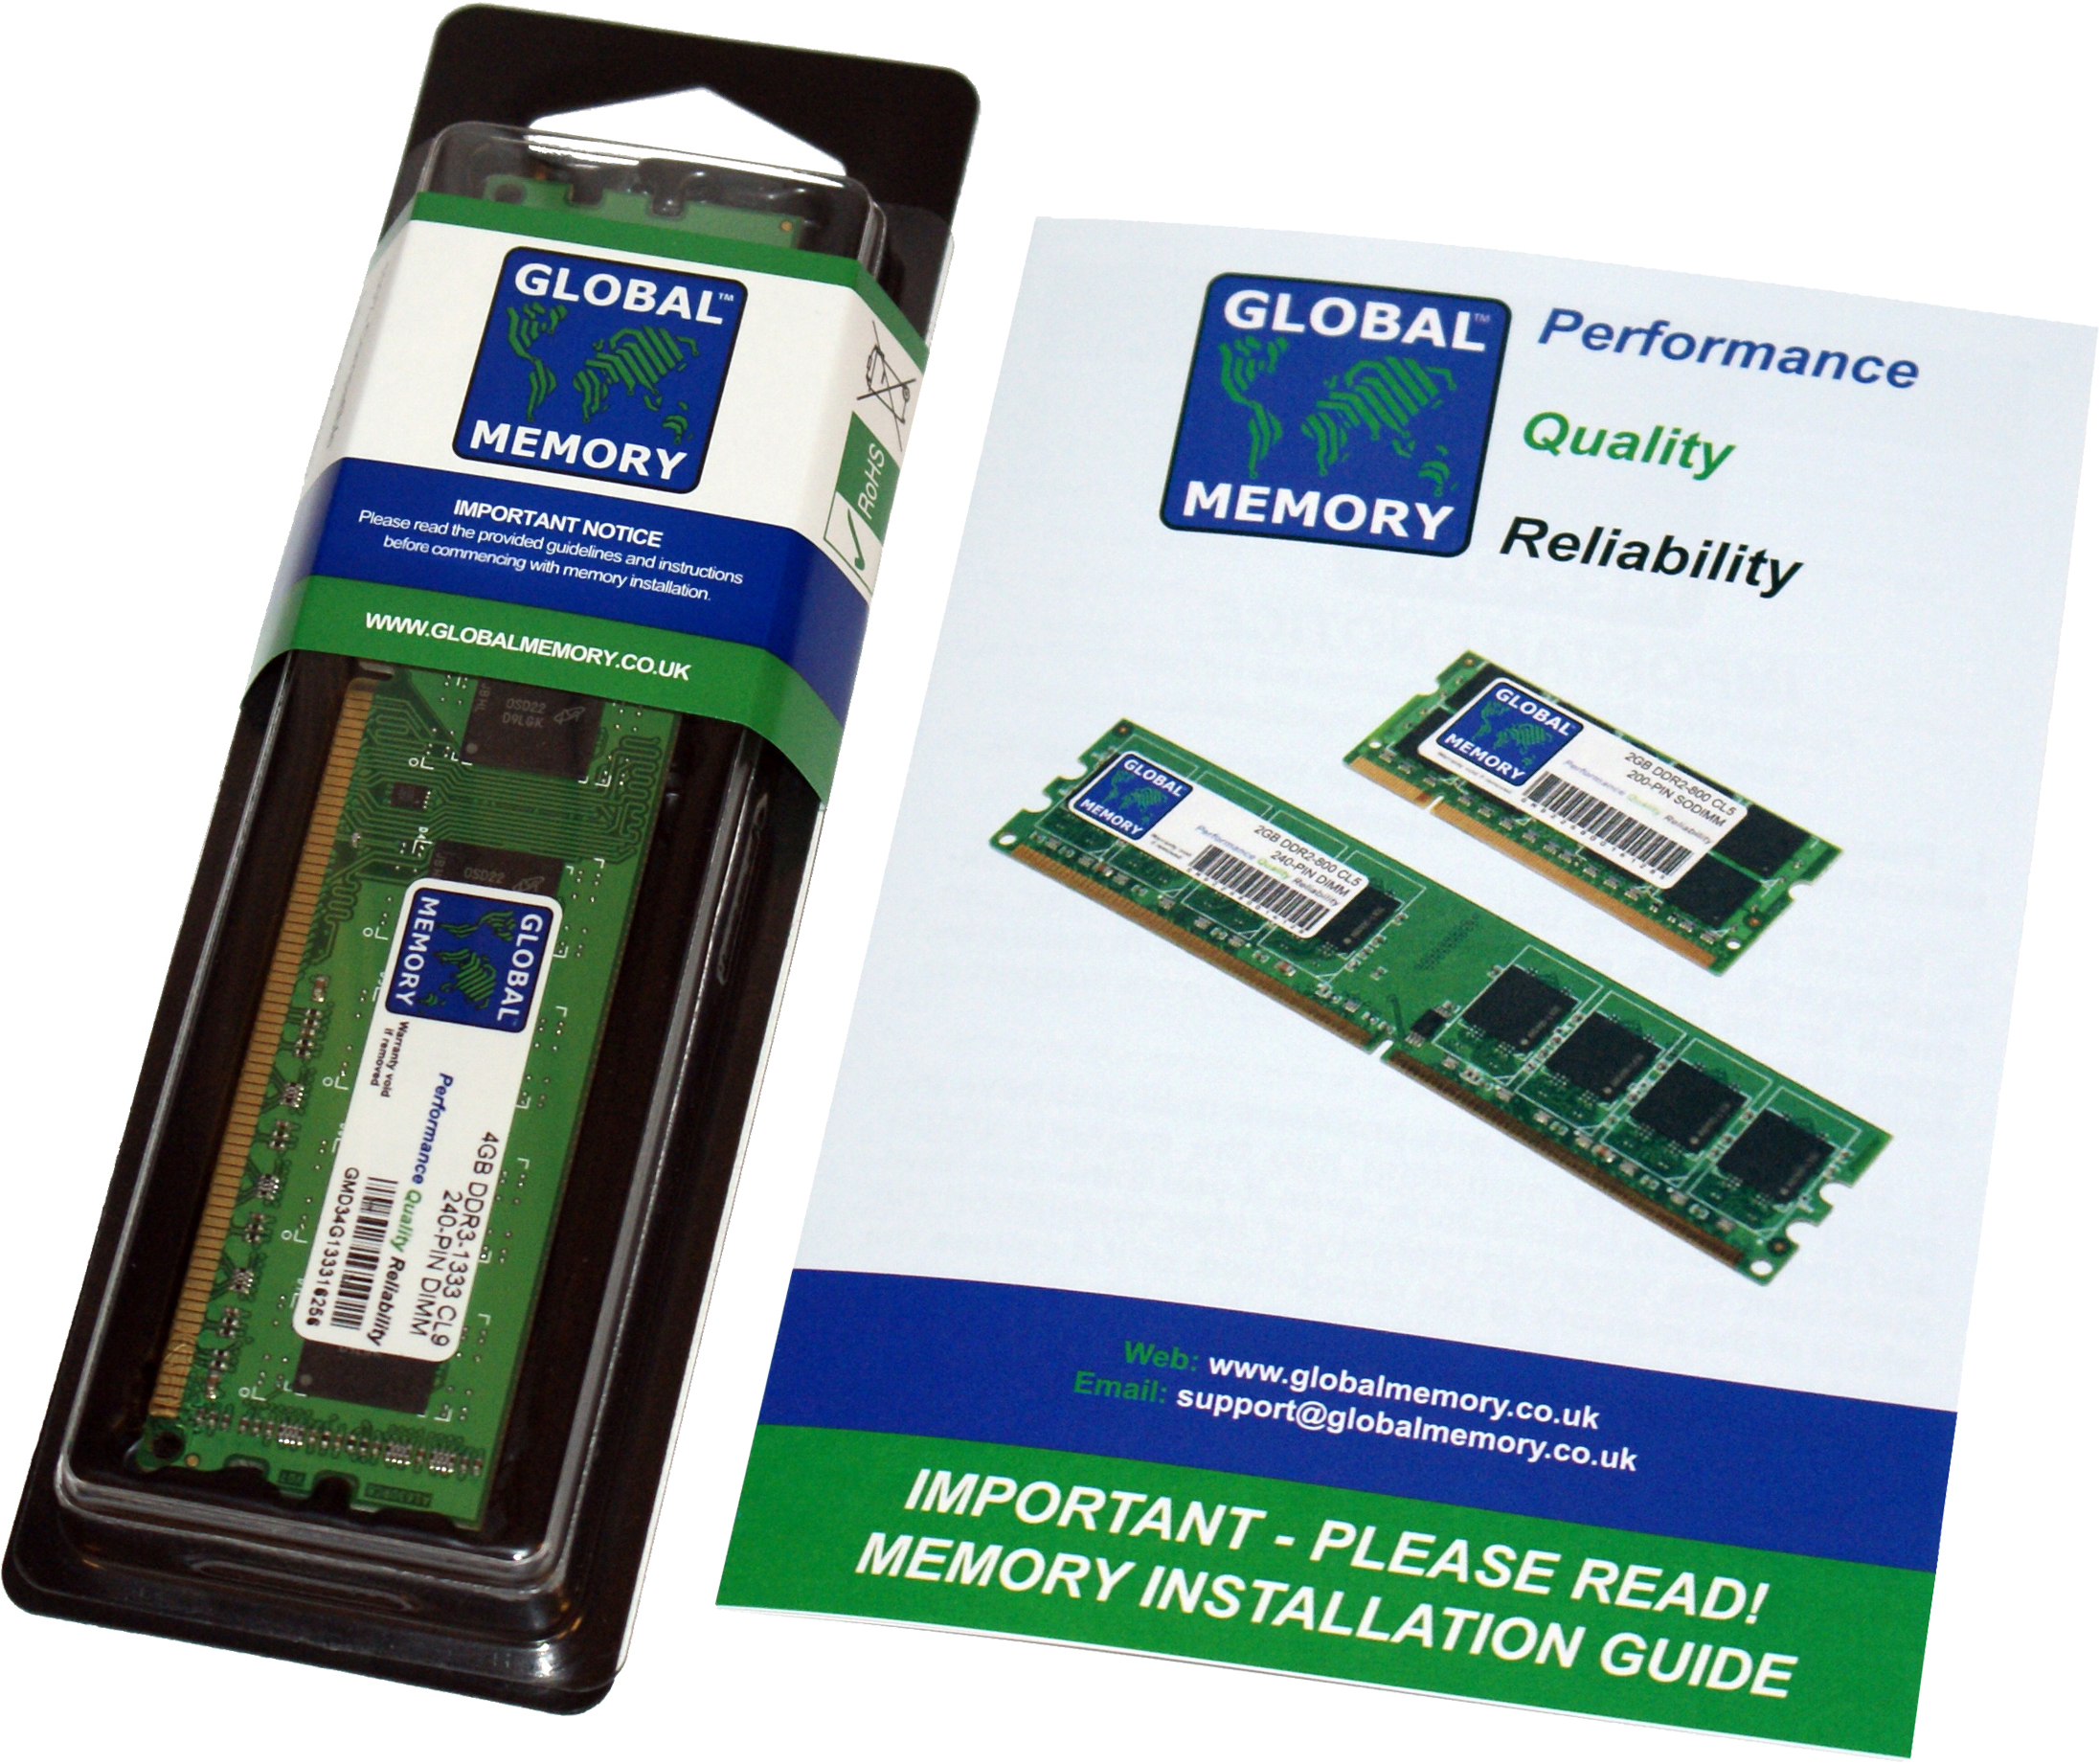 8GB DDR3 1866MHz PC3-14900 240-PIN DIMM MEMORY RAM FOR FUJITSU DESKTOPS